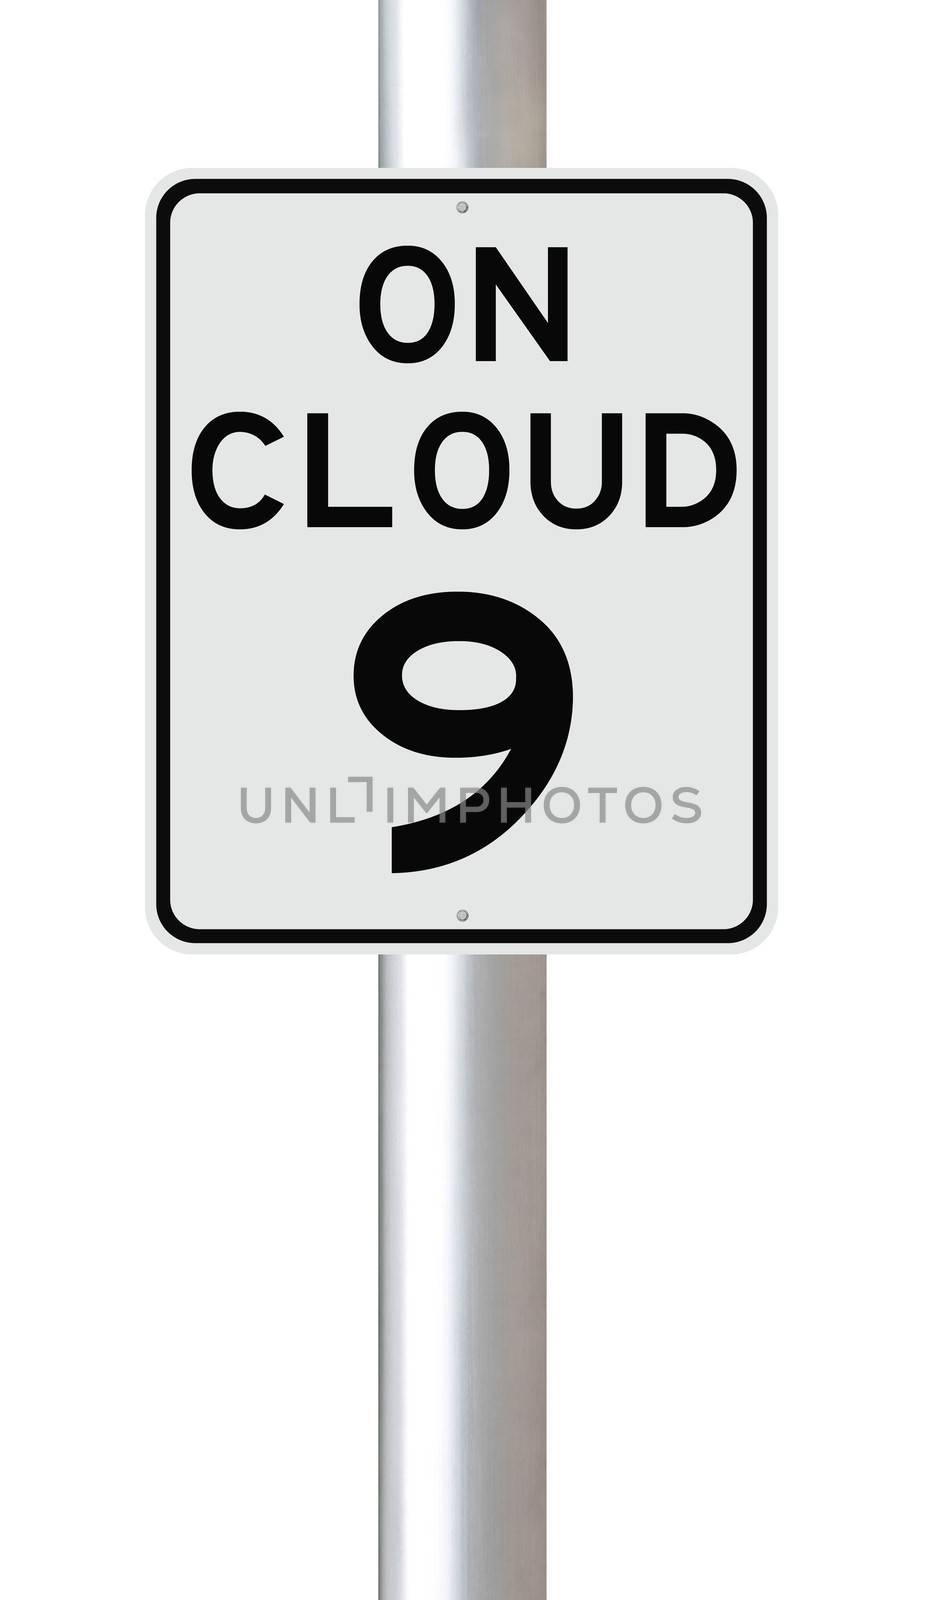 On Cloud Nine by rnl